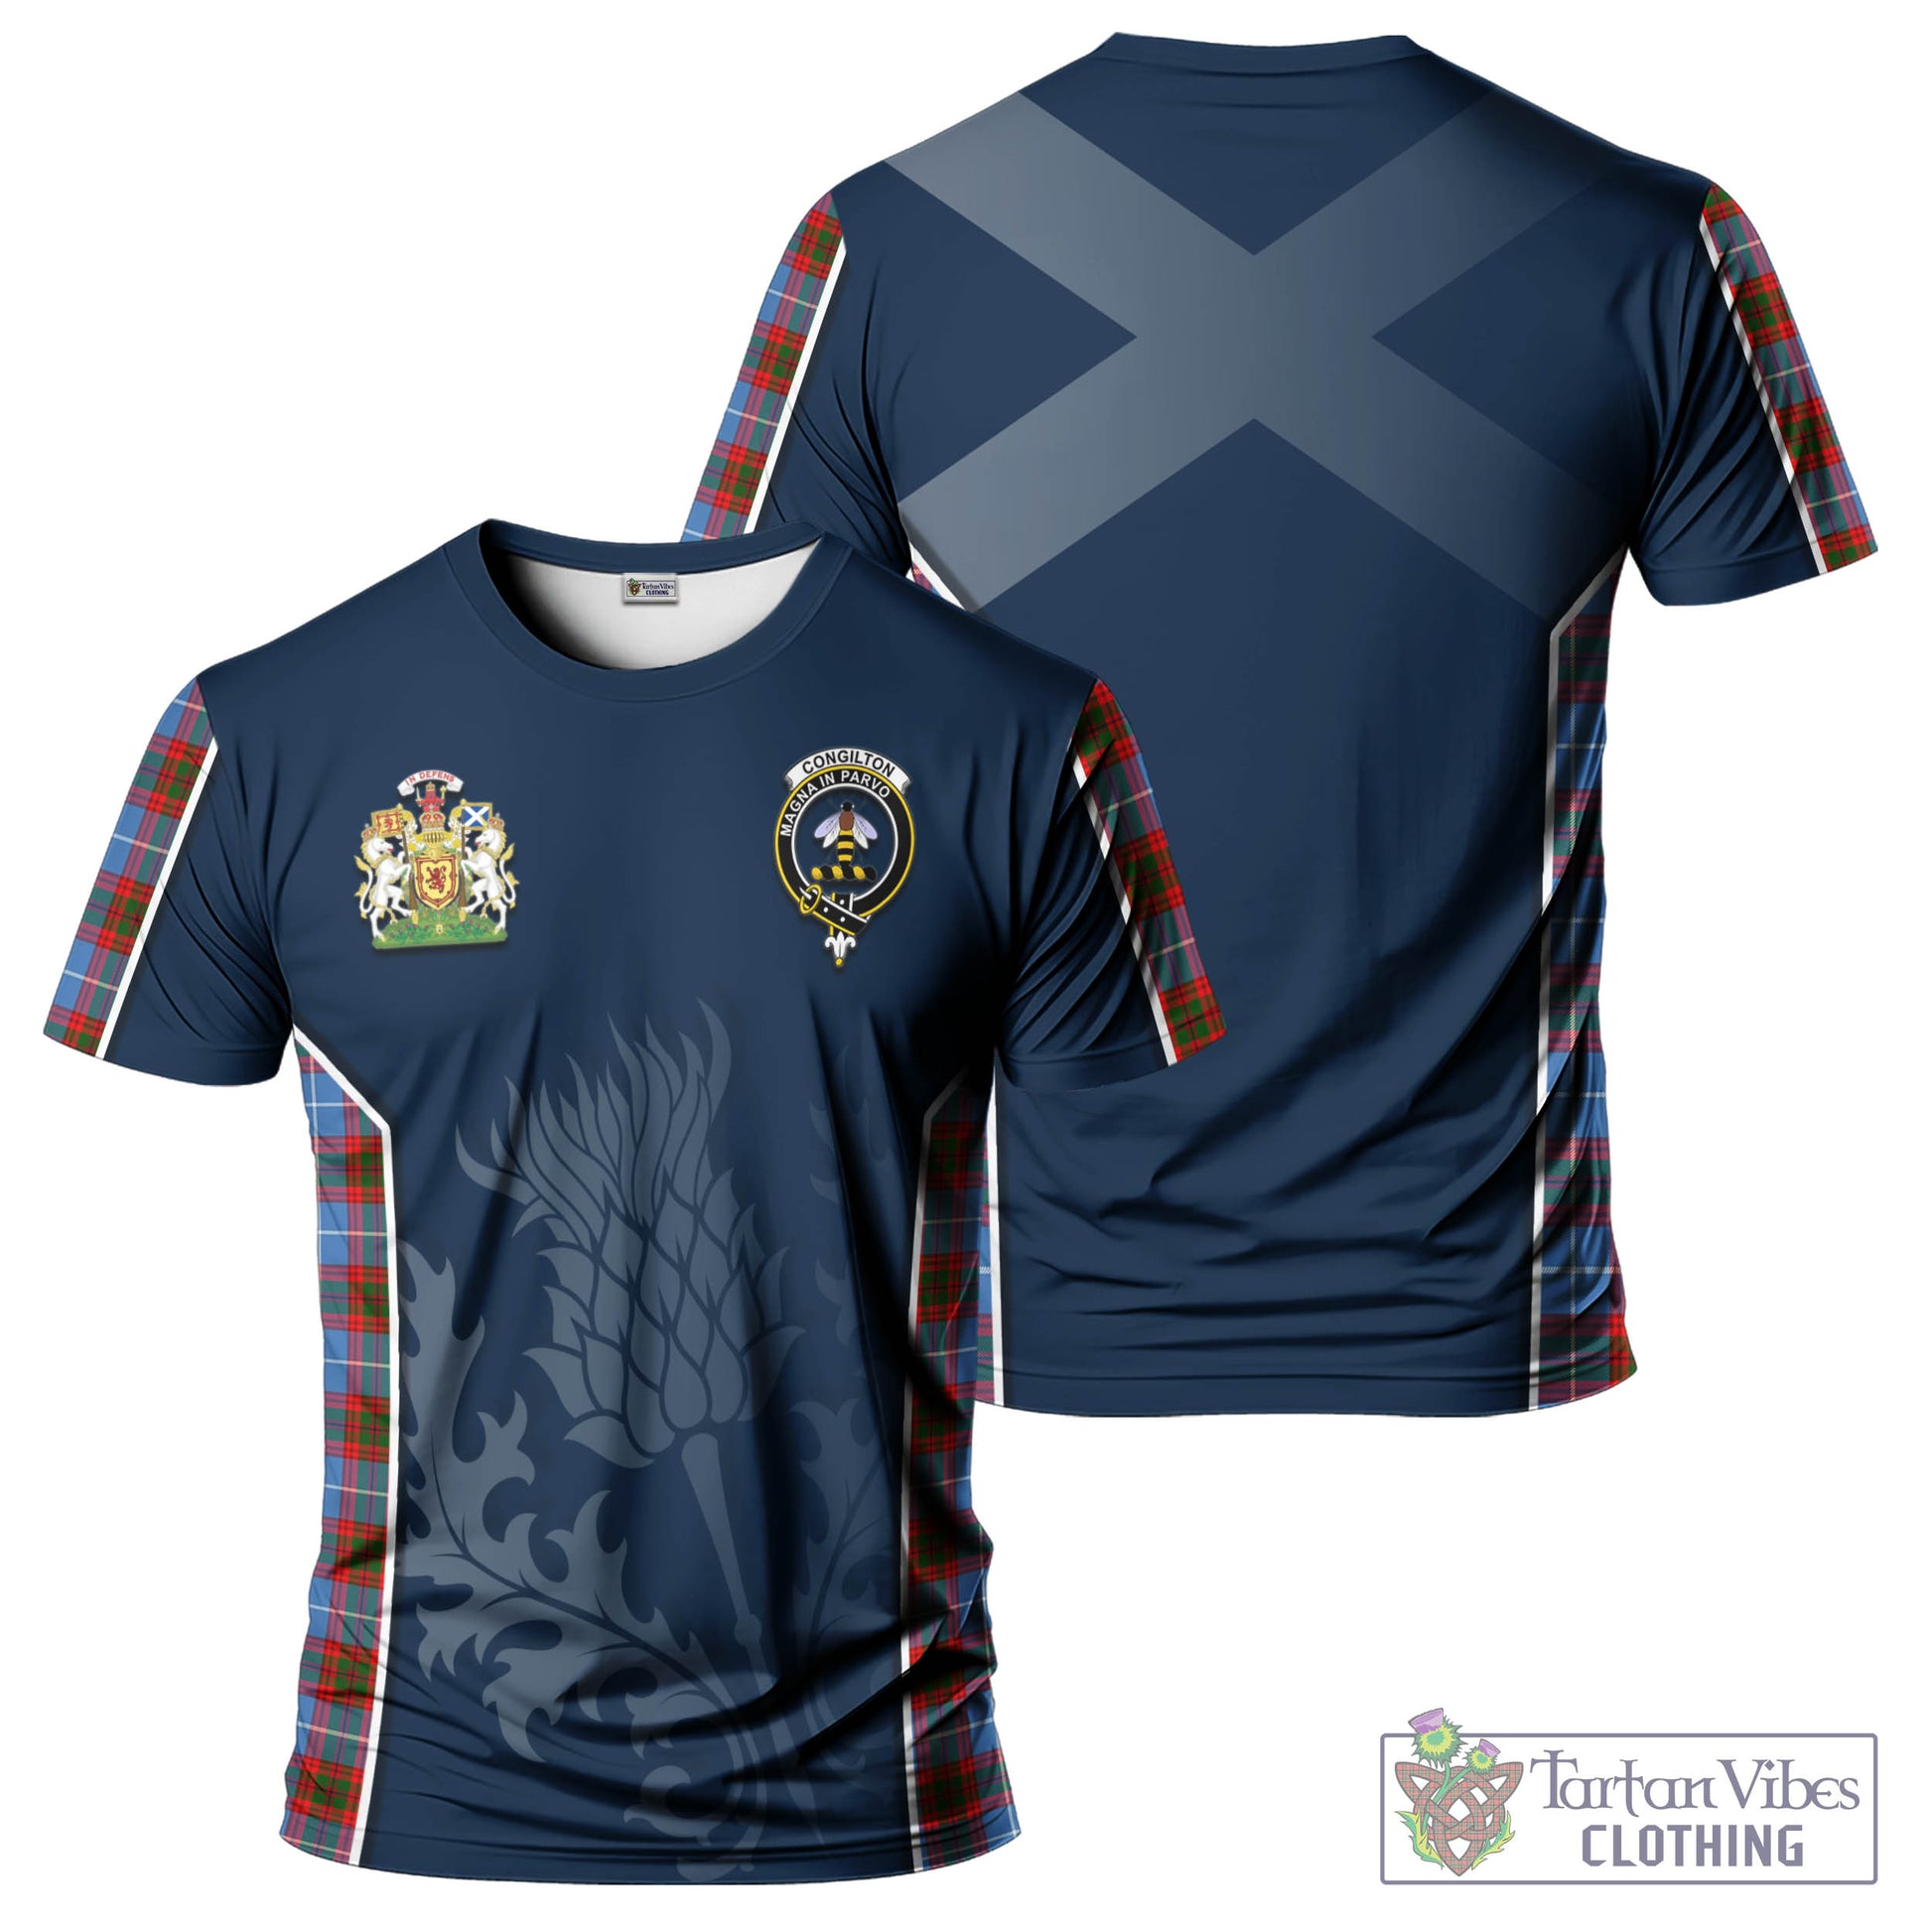 Tartan Vibes Clothing Congilton Tartan T-Shirt with Family Crest and Scottish Thistle Vibes Sport Style